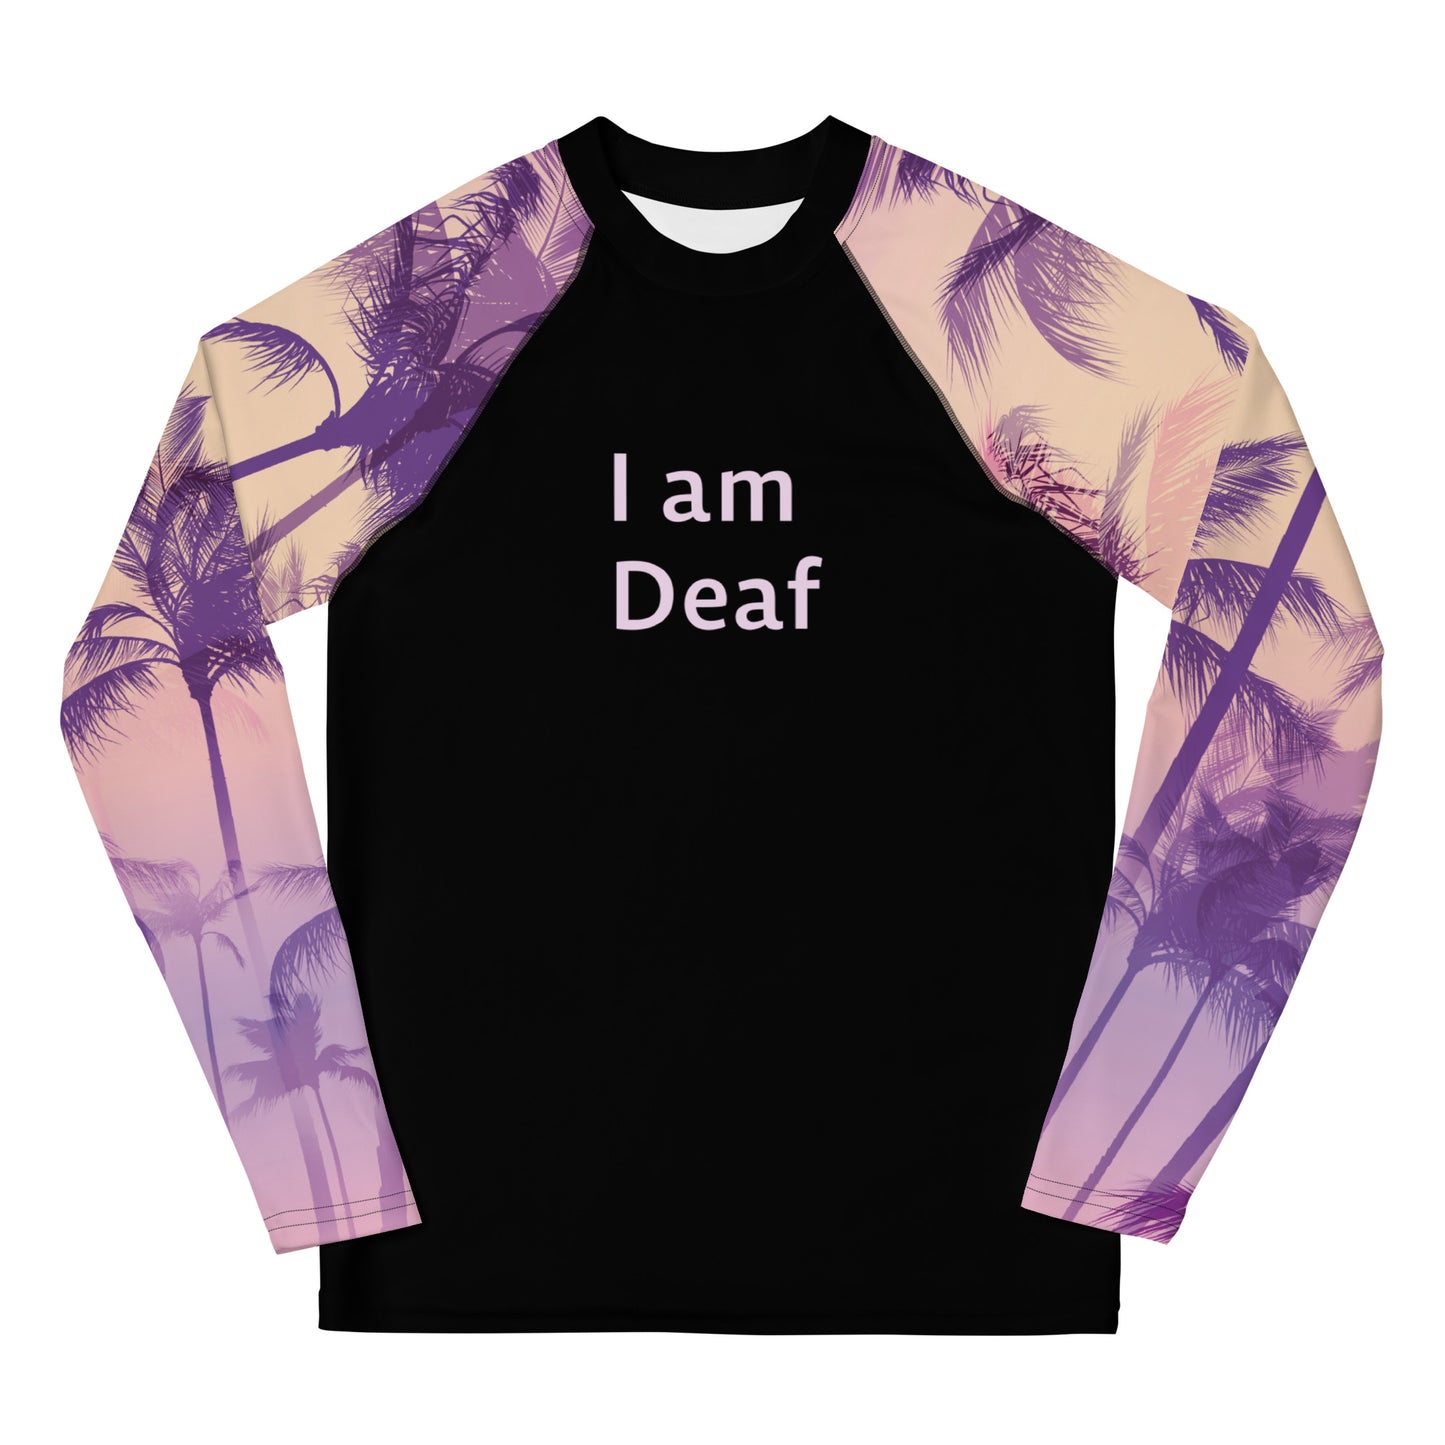 I am Deaf - Palm Youth Rash Guard